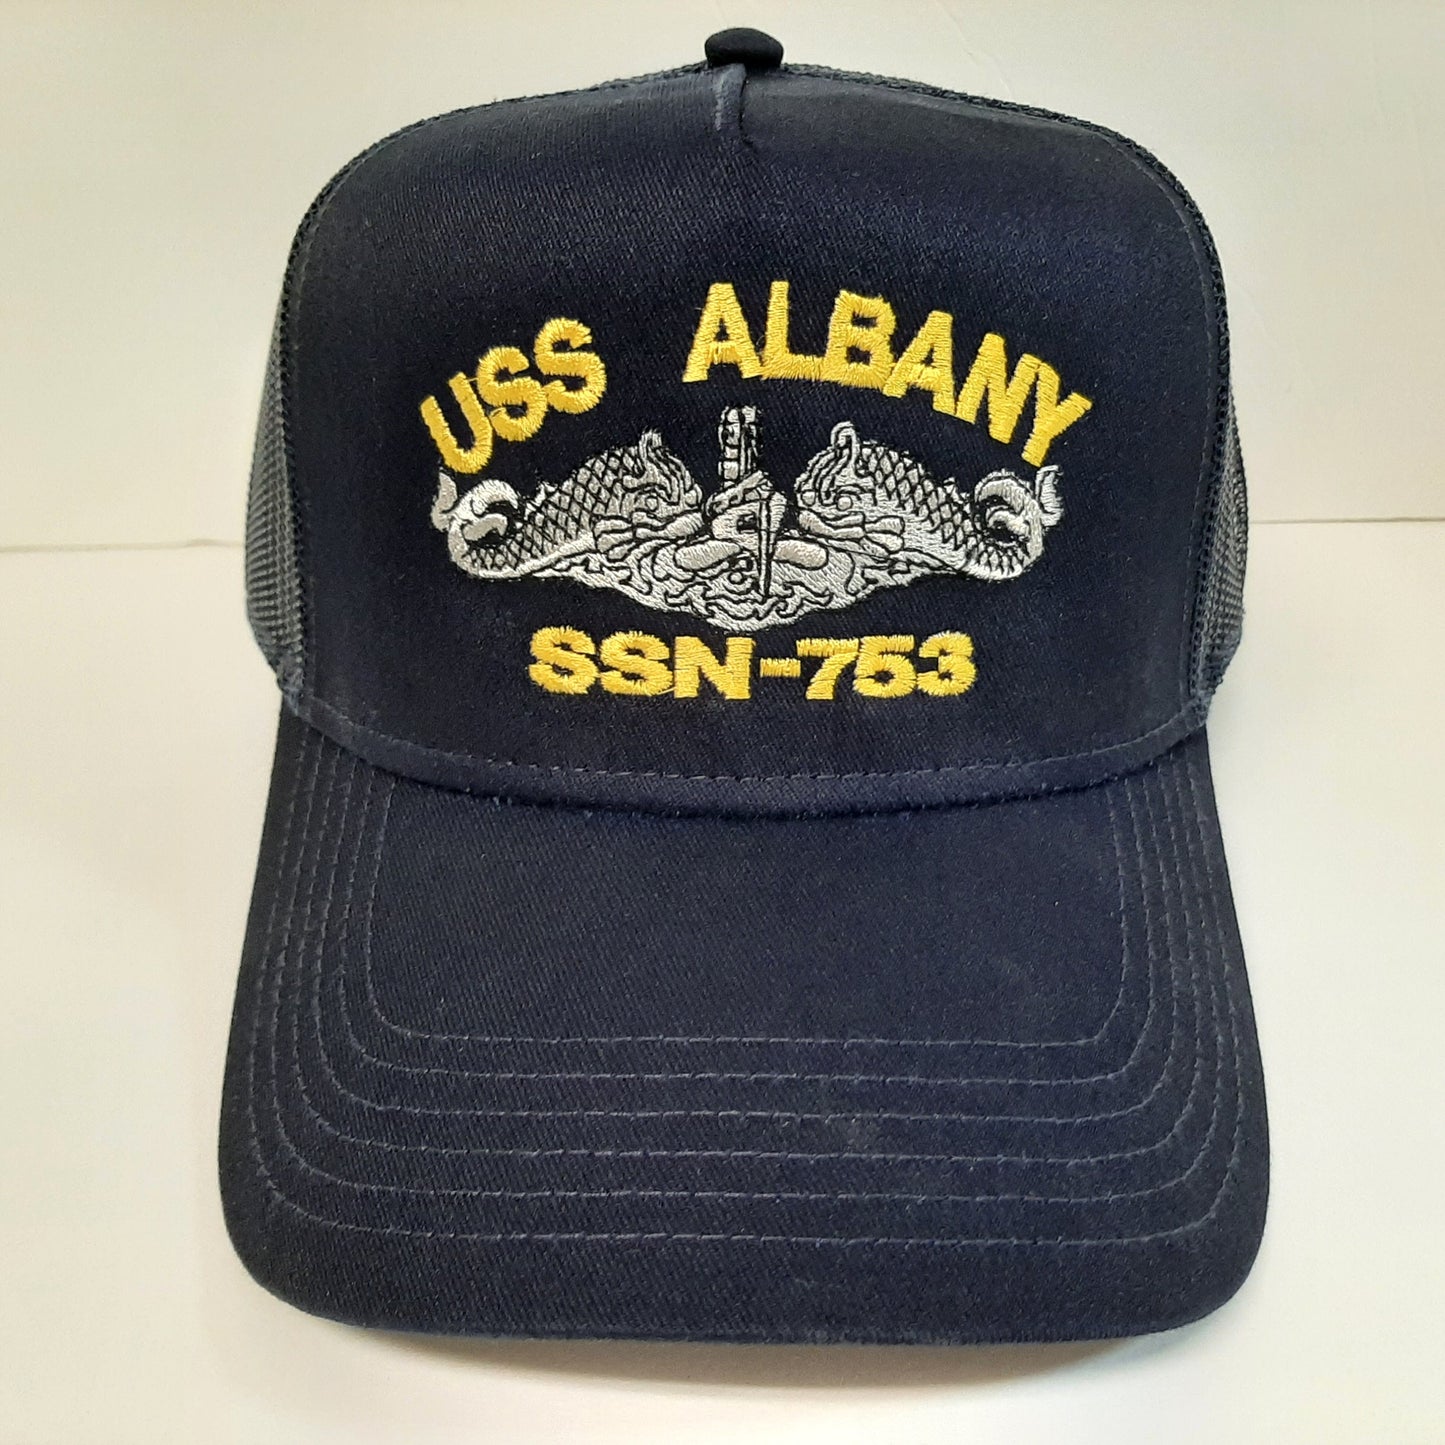 USS Albany SSN-753 Boat Baseball Cap Hat Mesh Snapback Blue Embroidered US Navy